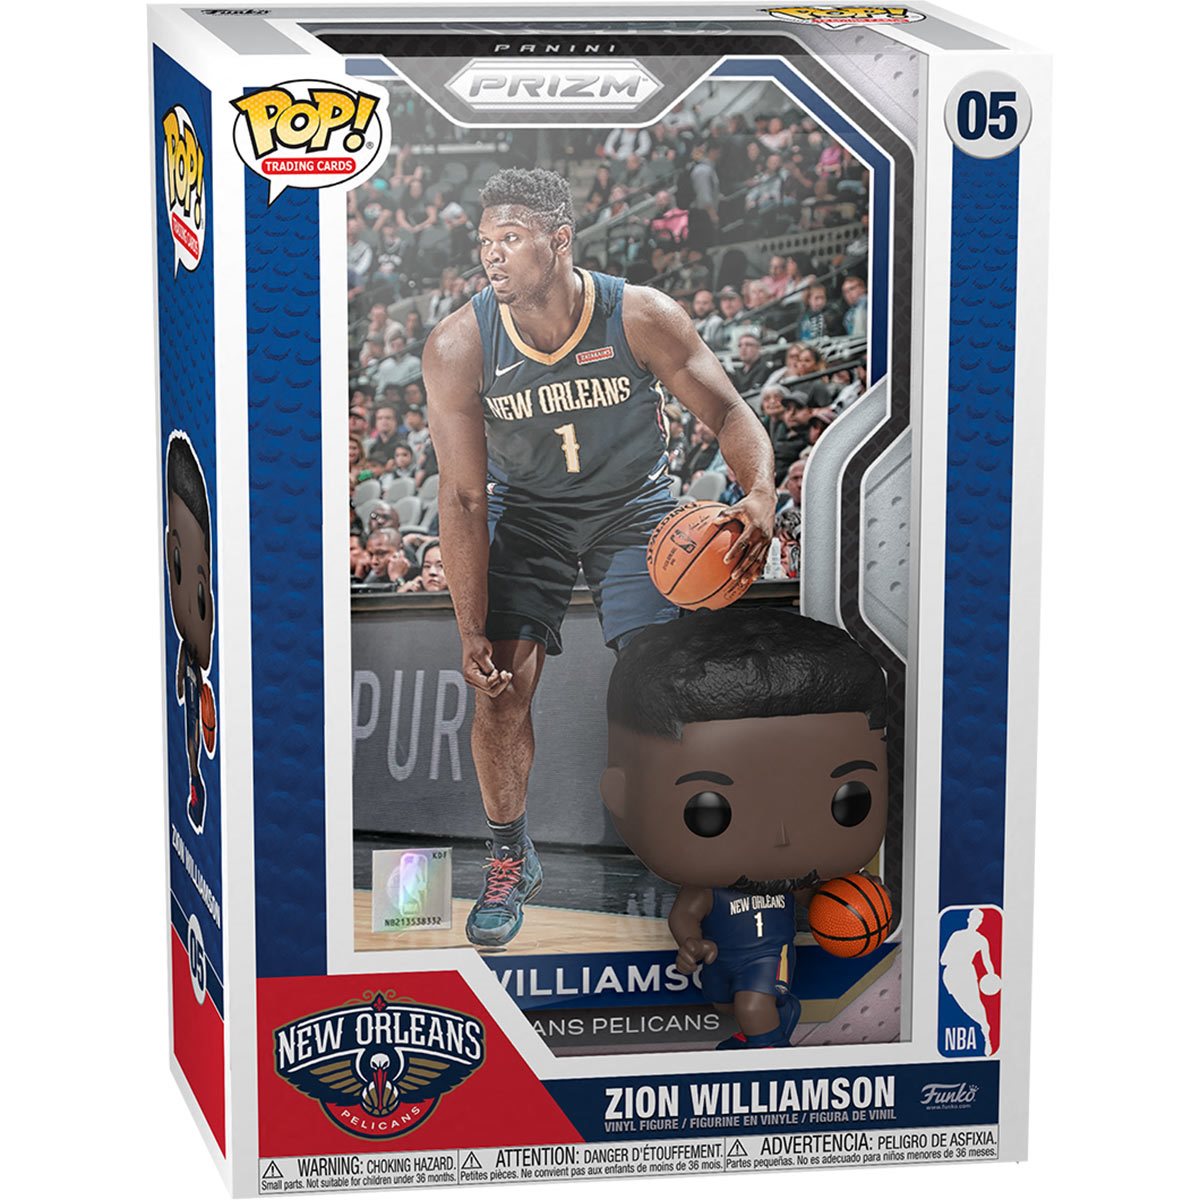 NBA: New Orleans Pelicans - Zion Williamson Pop! Trading Card Figure with Case Vinyl Figure (05)